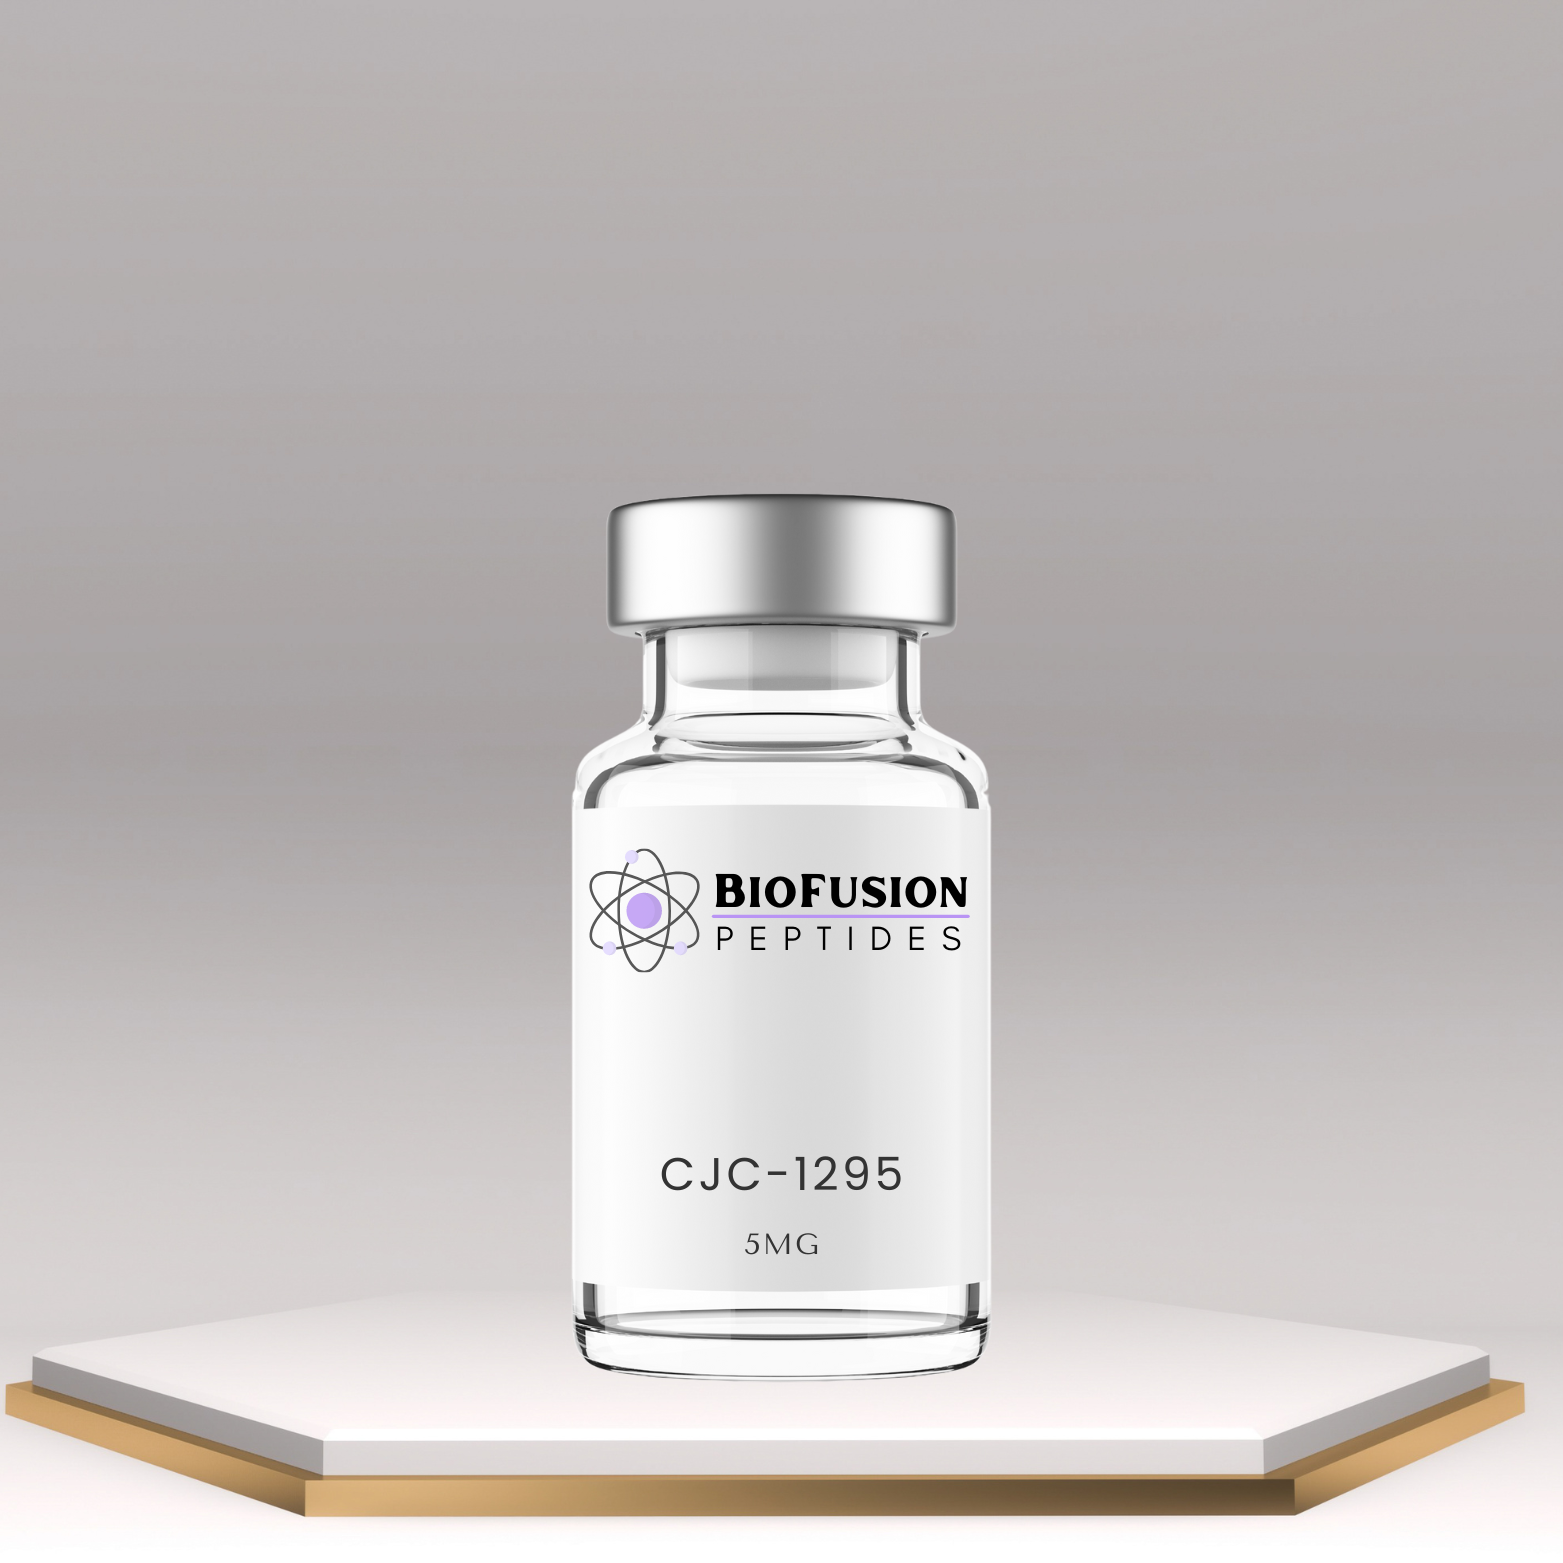 BioFusion Peptides CJC-1295 5MG vial